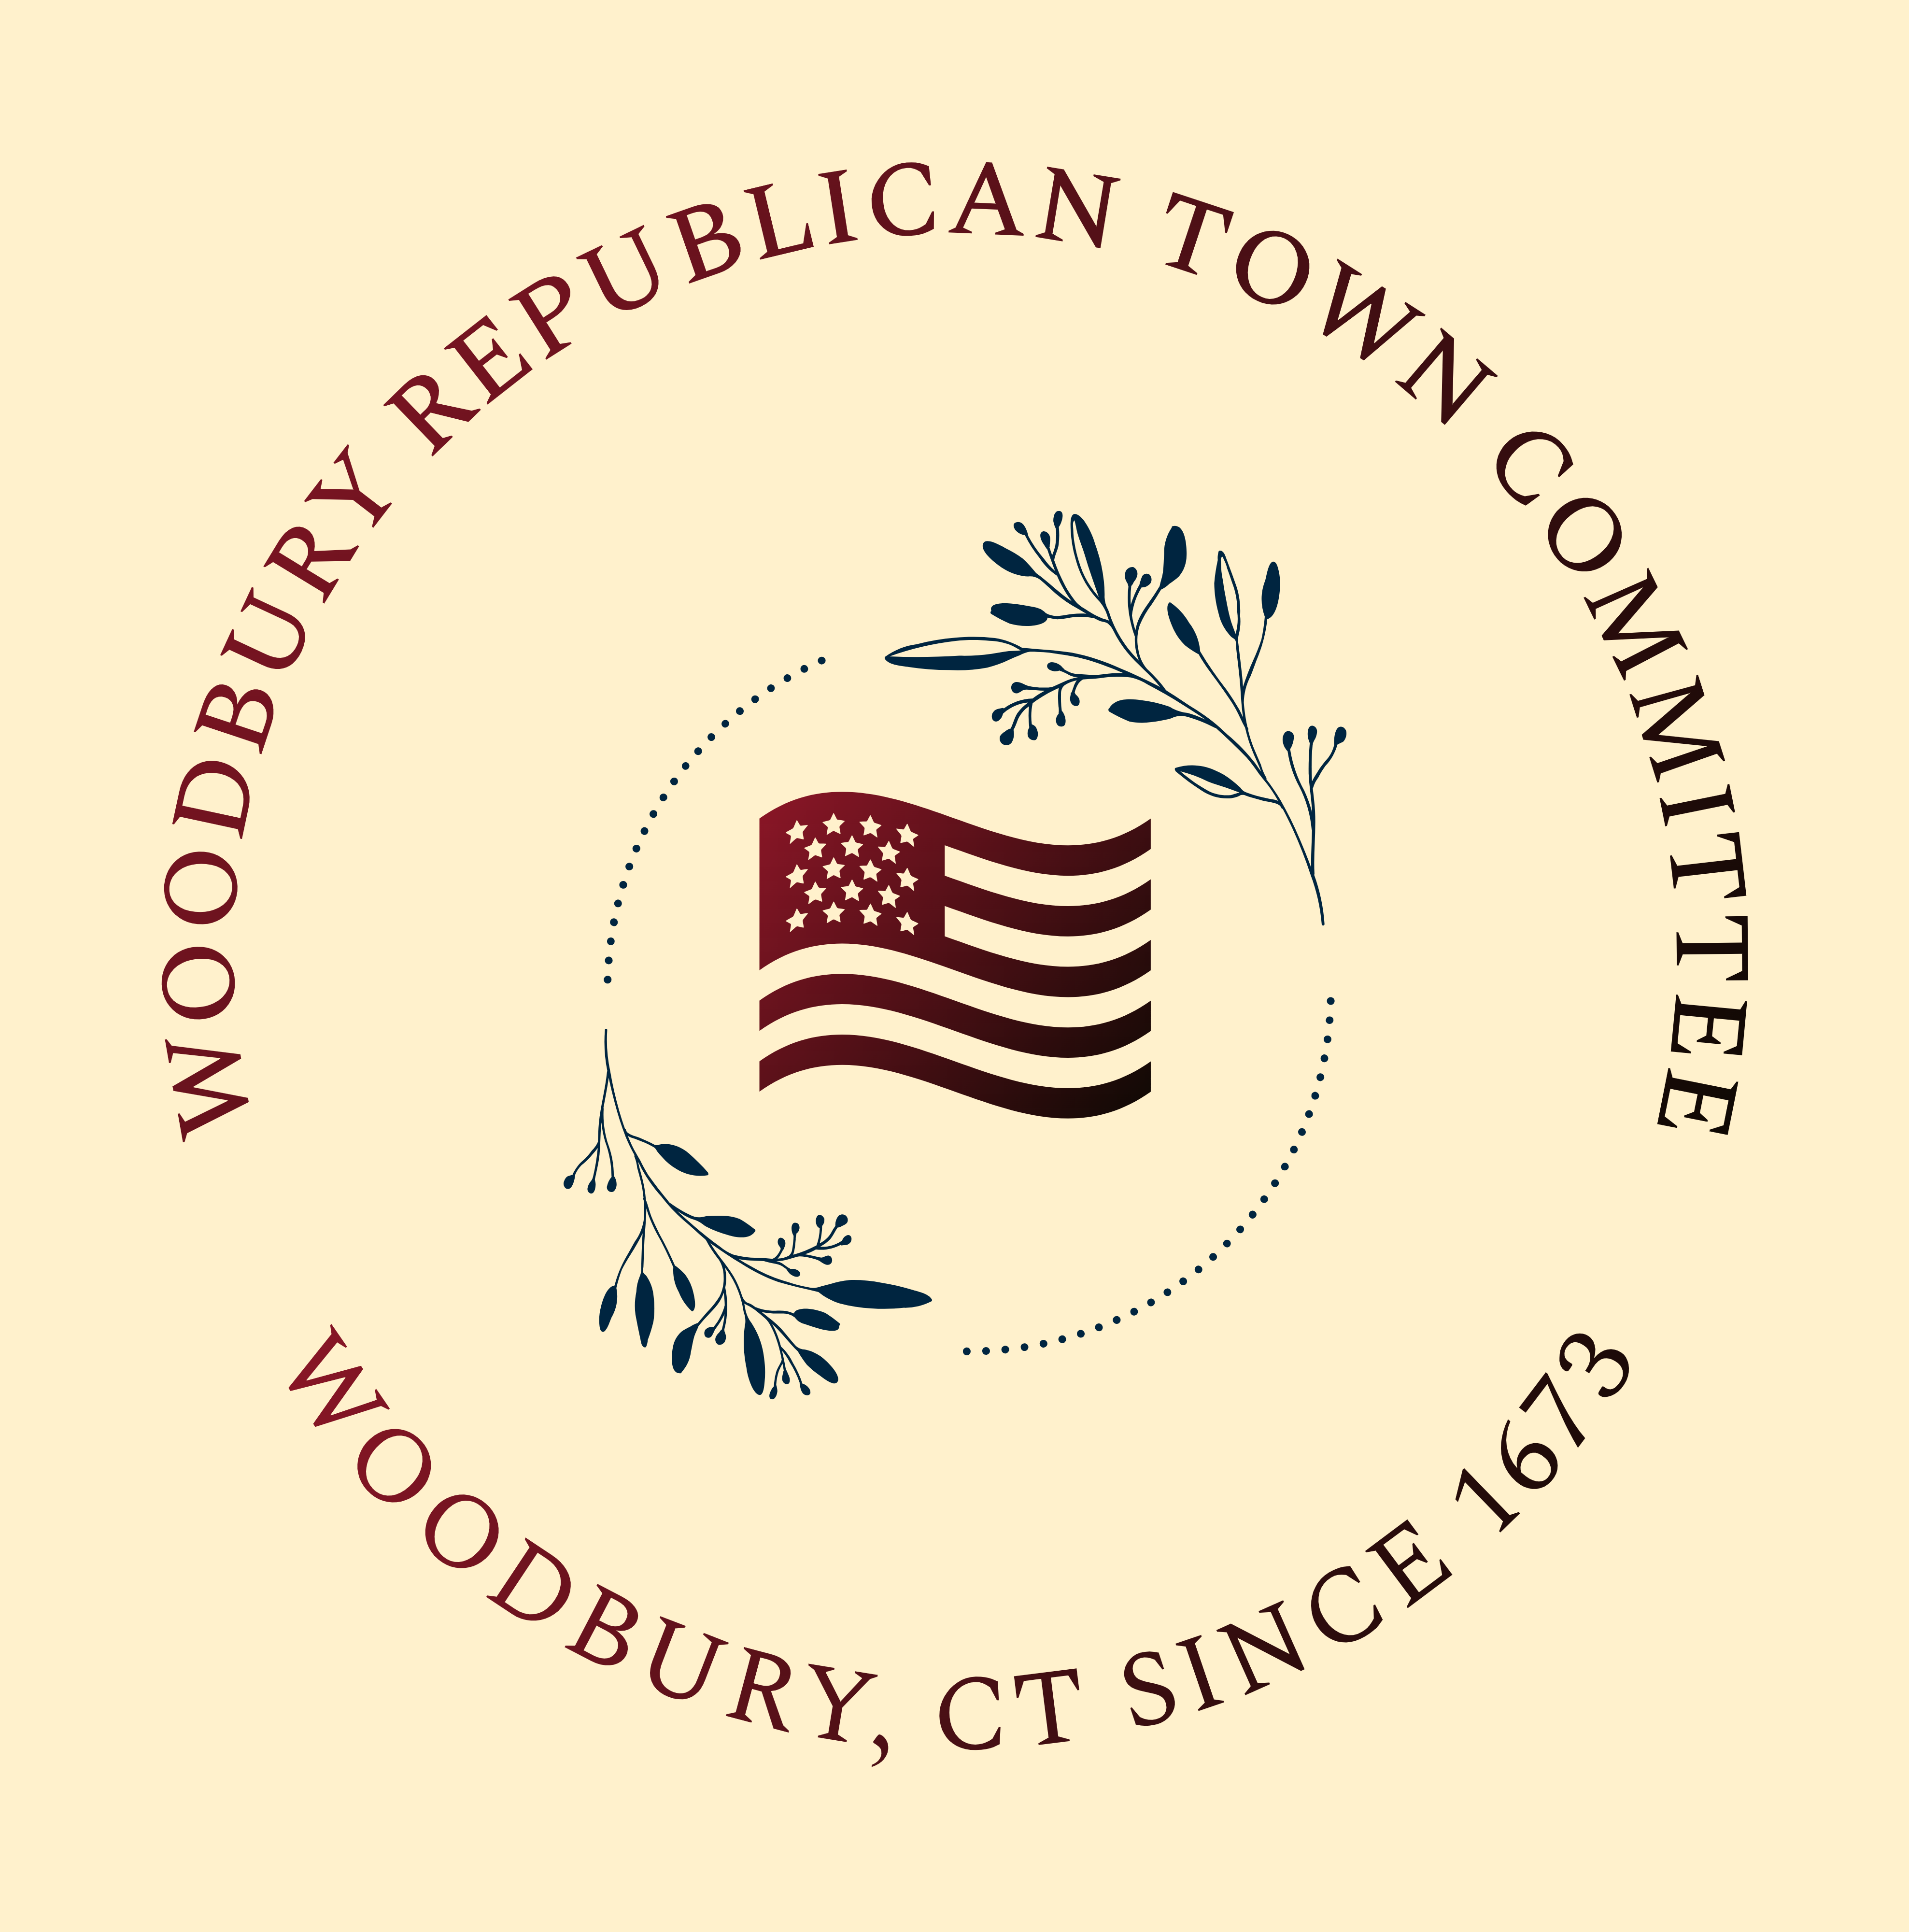 Woodbury Republican Town Committee